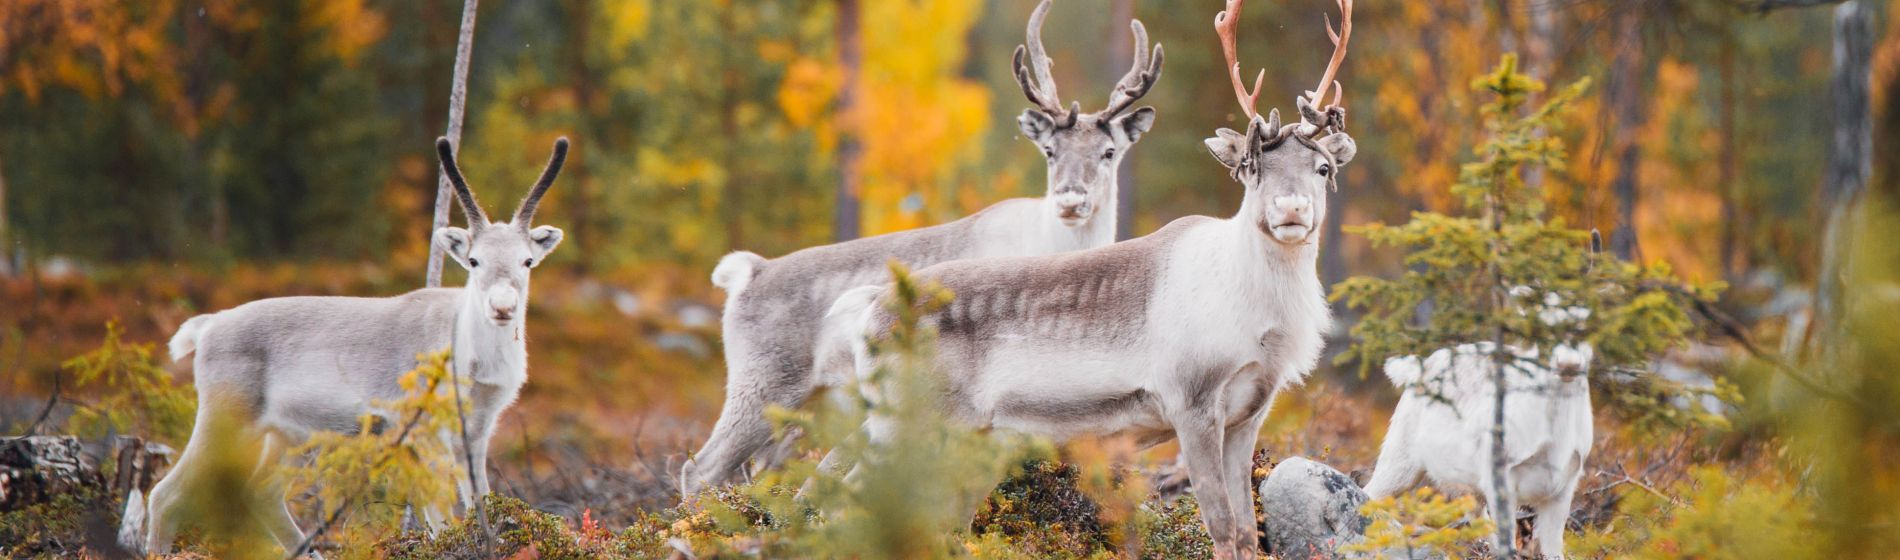 finland_lapland_pallas-yllaestunturi_autumn_reindeers_highres_byjuliakivela_mg_6001_1900x535px.jpg